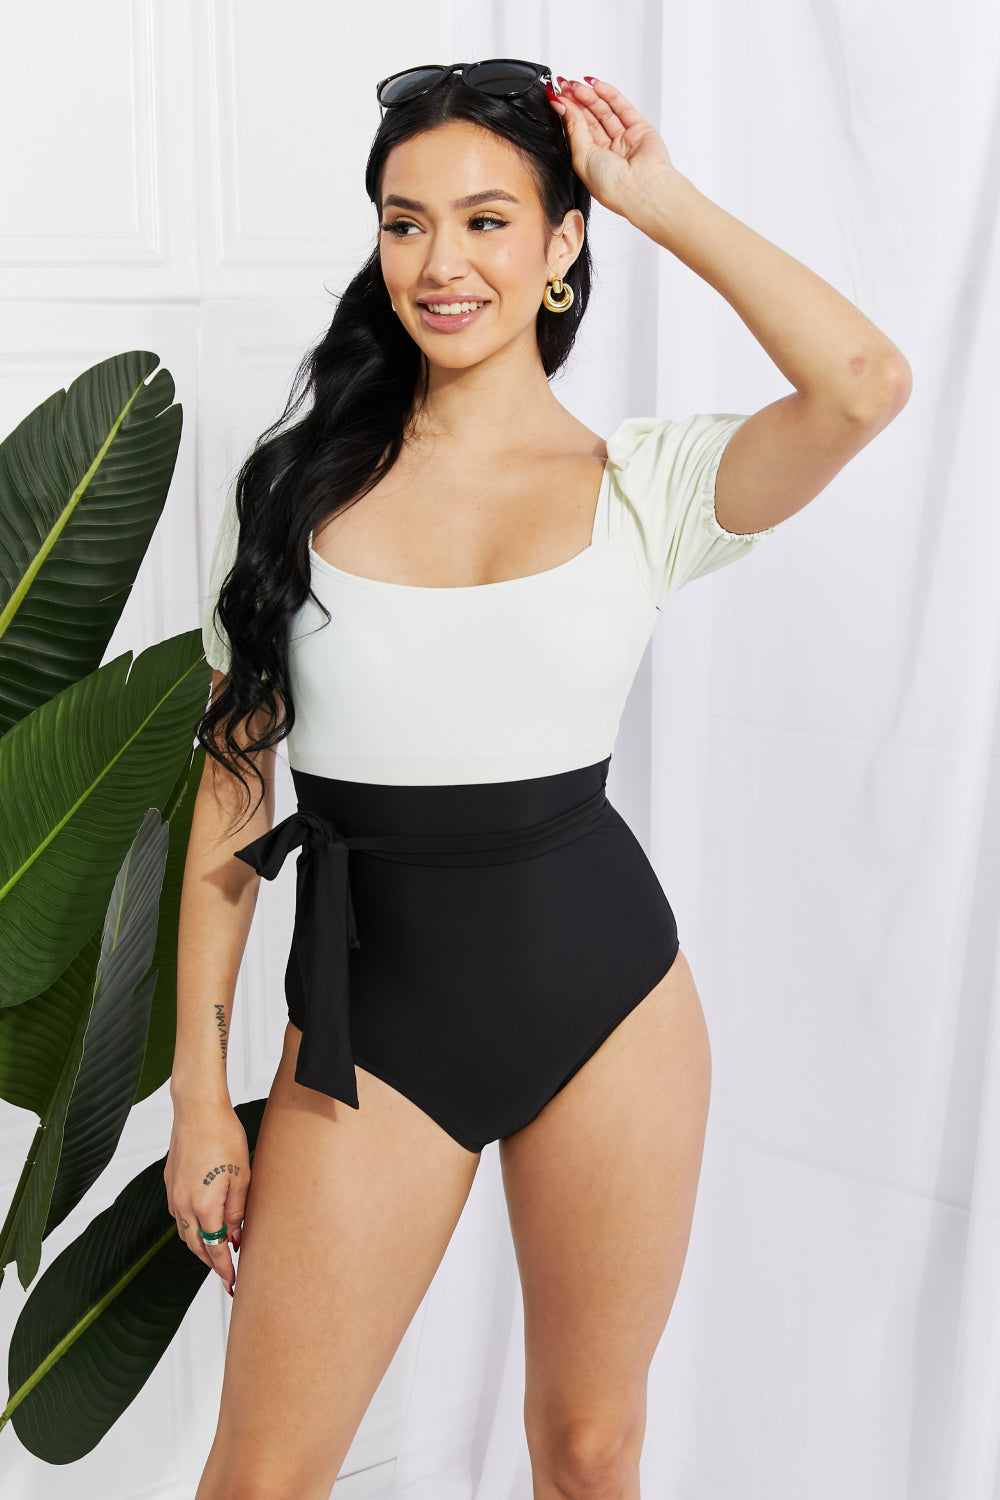 Marina West Swim Salty Air Puff Sleeve One-Piece in Cream/Black - Online Only